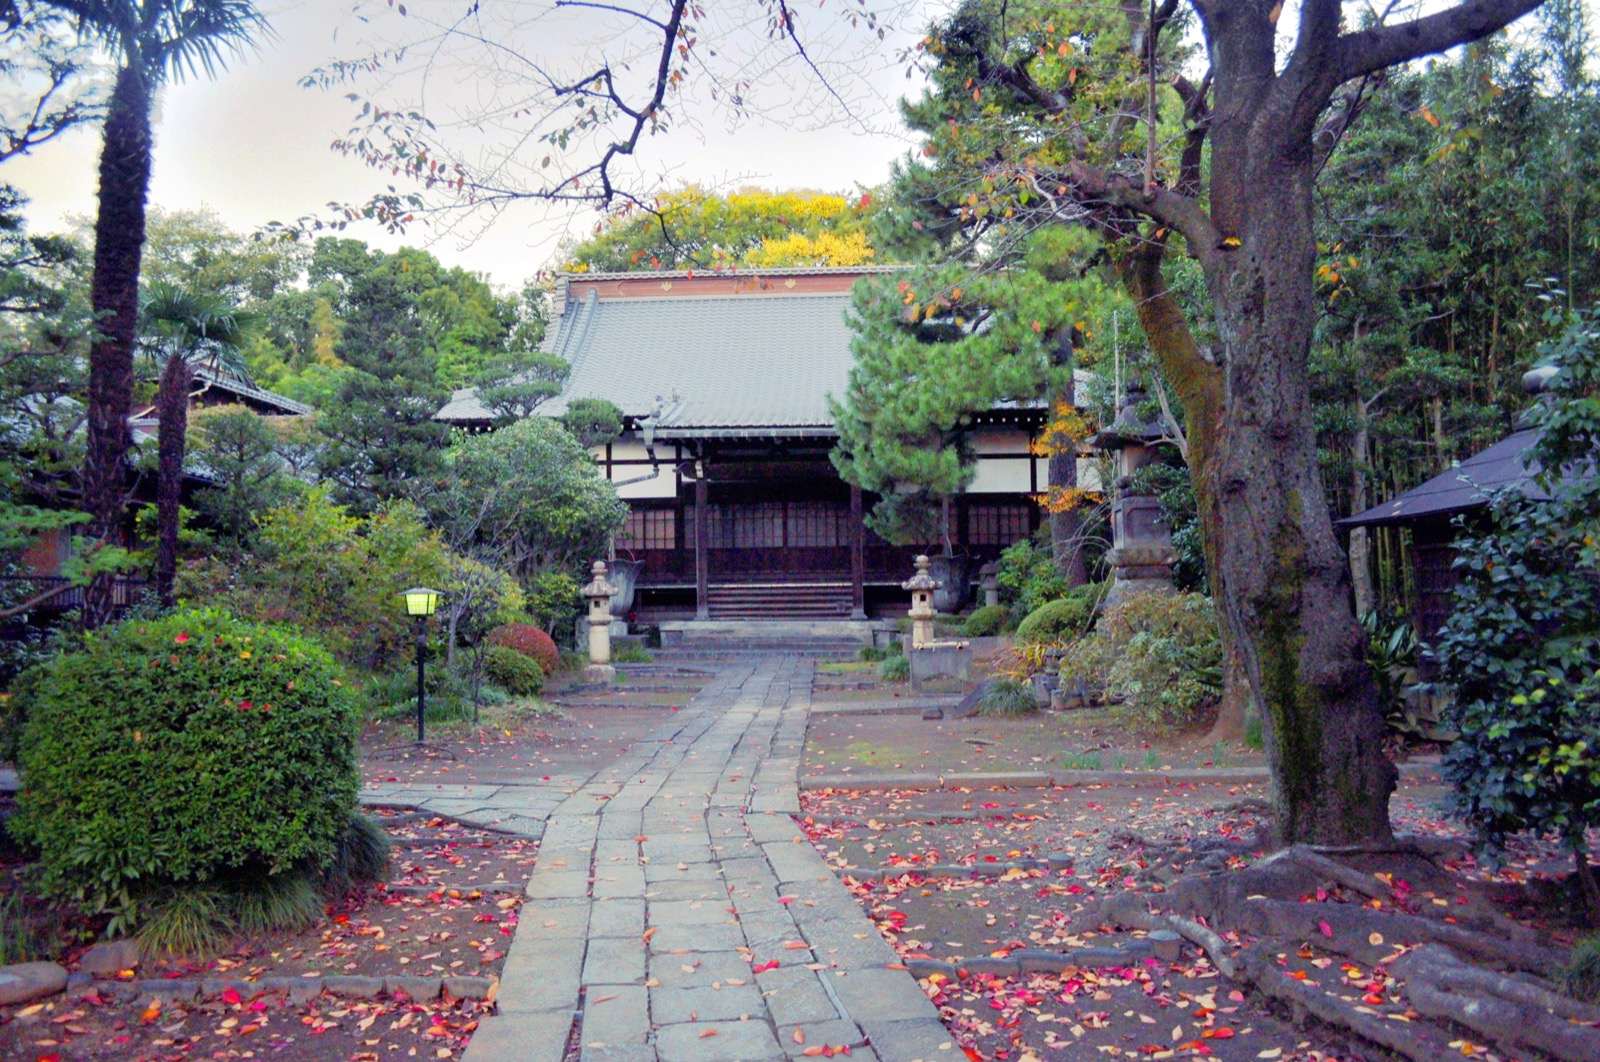 Photo of Rinkoji Temple, Japan (Tokyo - Yanaka 145 - Rinkoji Temple by Joe Mabel)